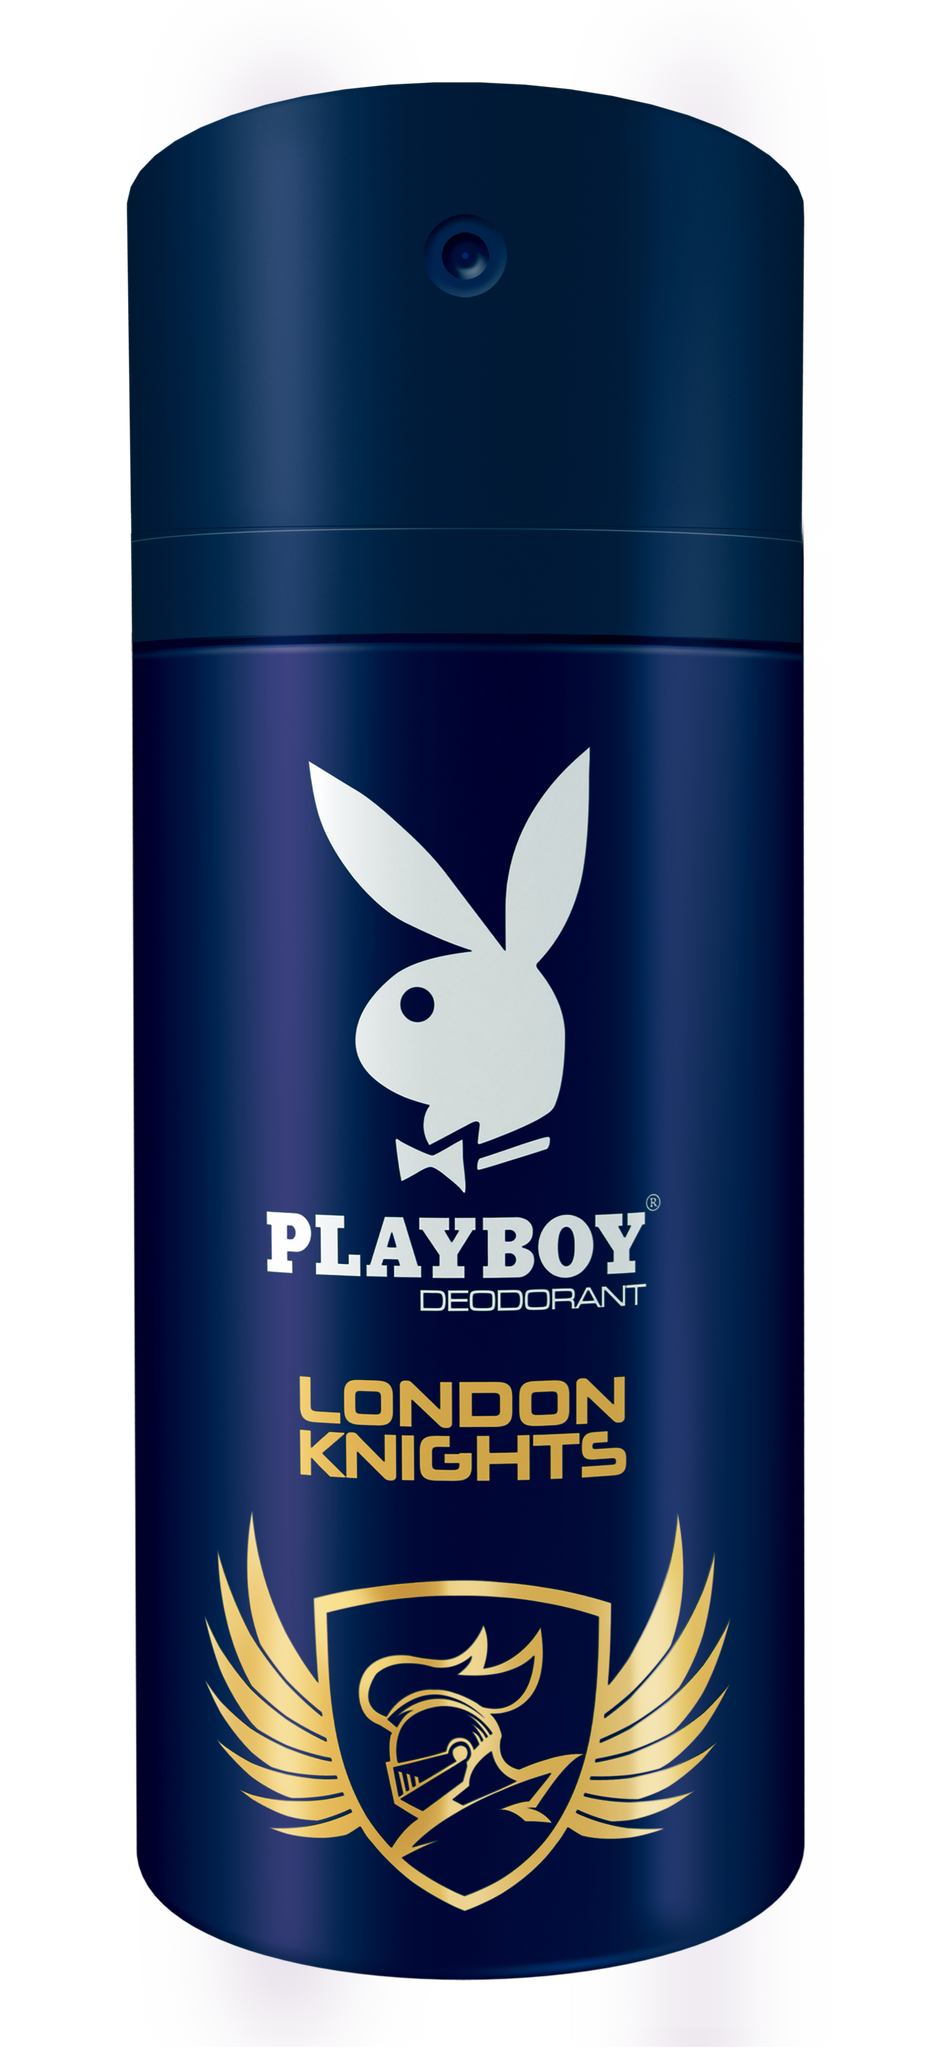 Playboy London Knights - Deodorant - 150ml